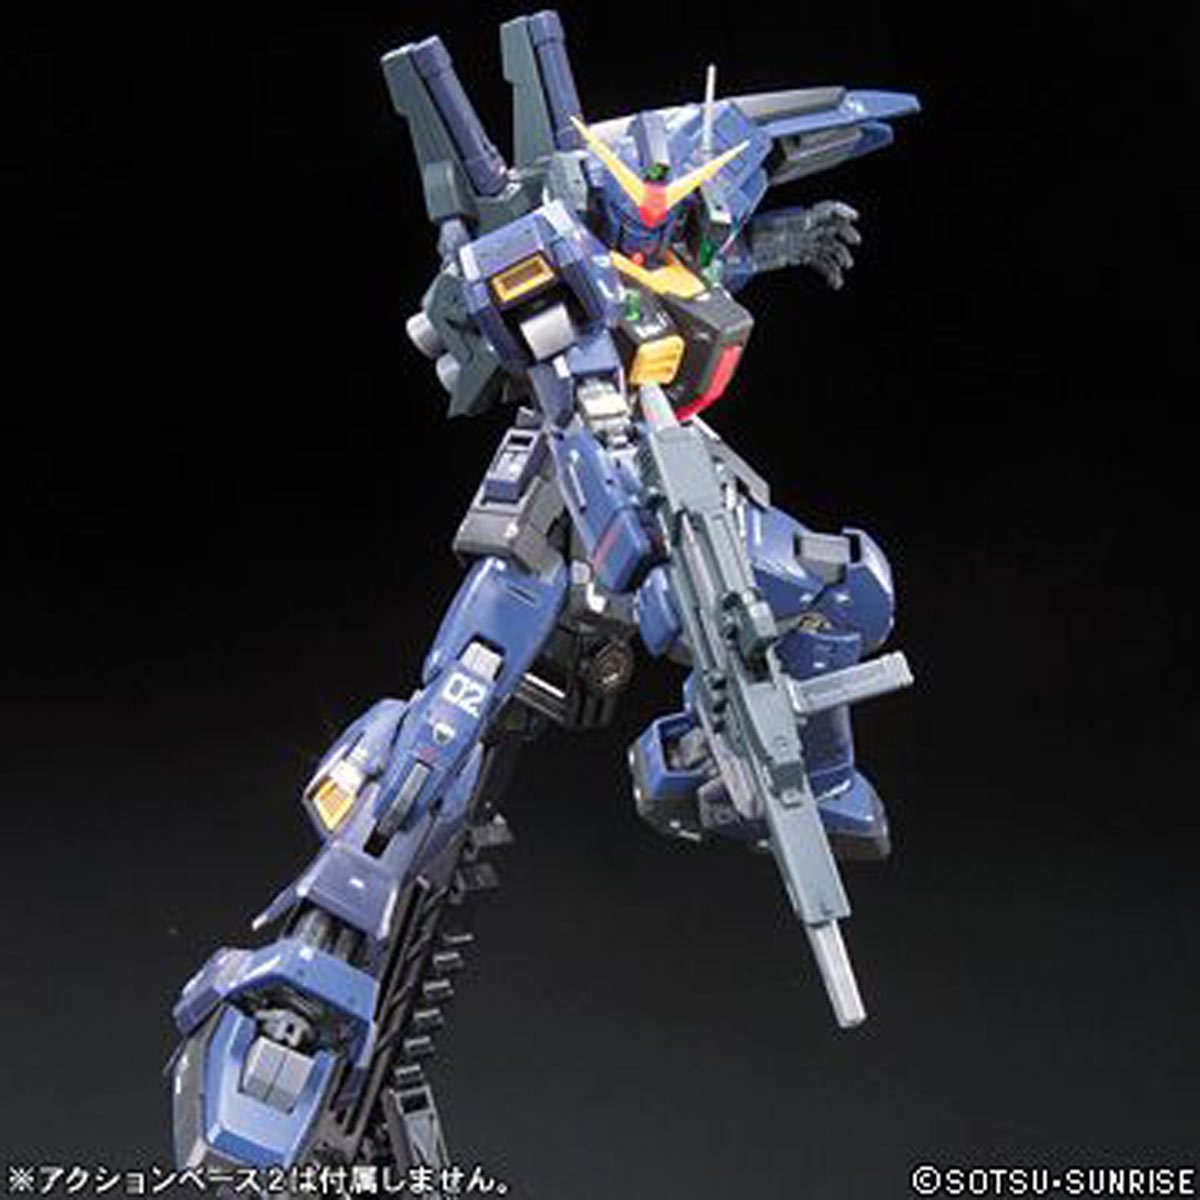 Bandai Hobby Gunpla Real Grade Model Kit: Mobile Suit Zeta Gundam - RX 178 MK-II Titans Escala 1/144